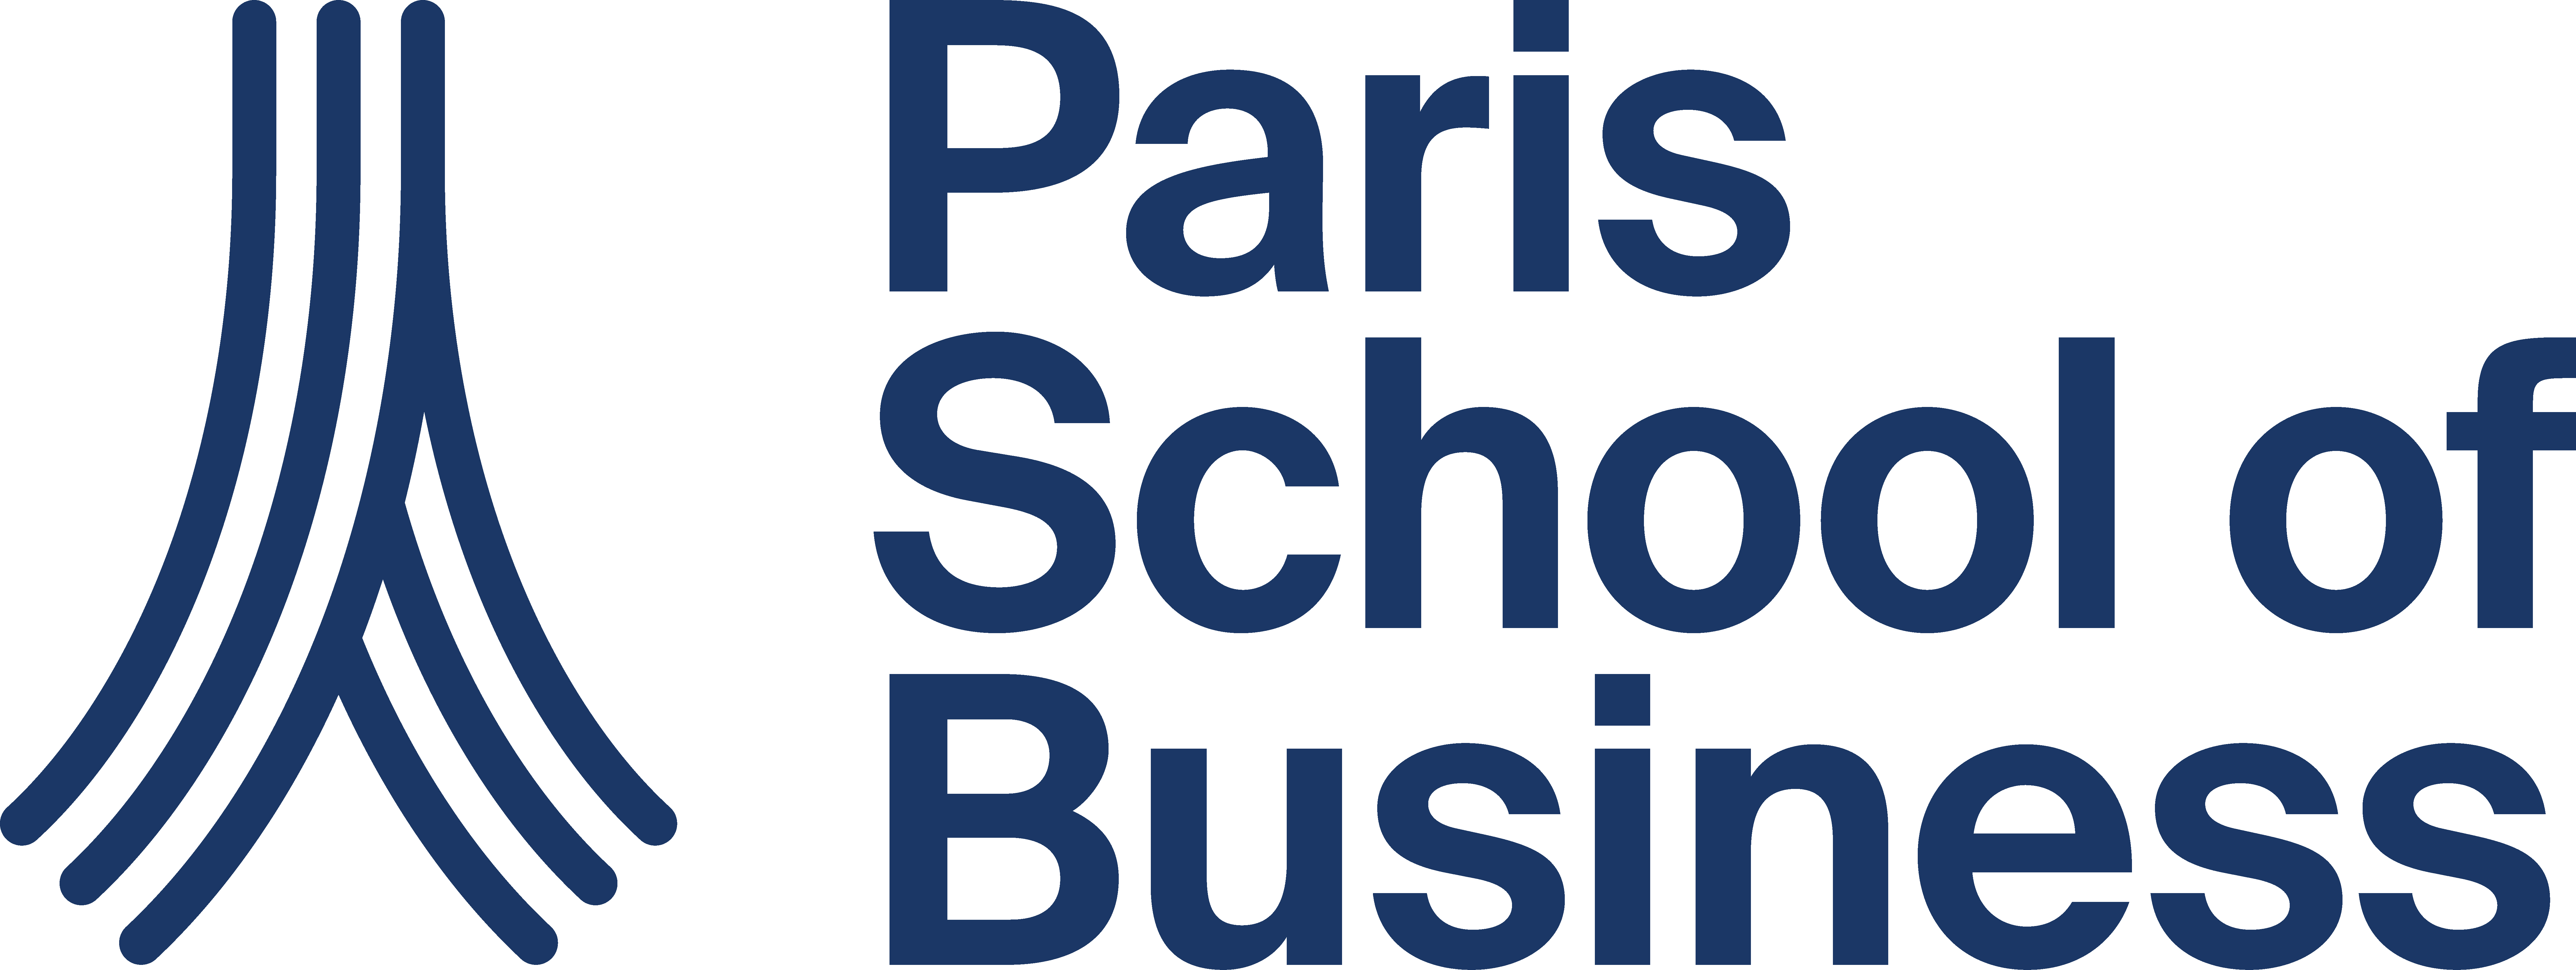 Logo PSB